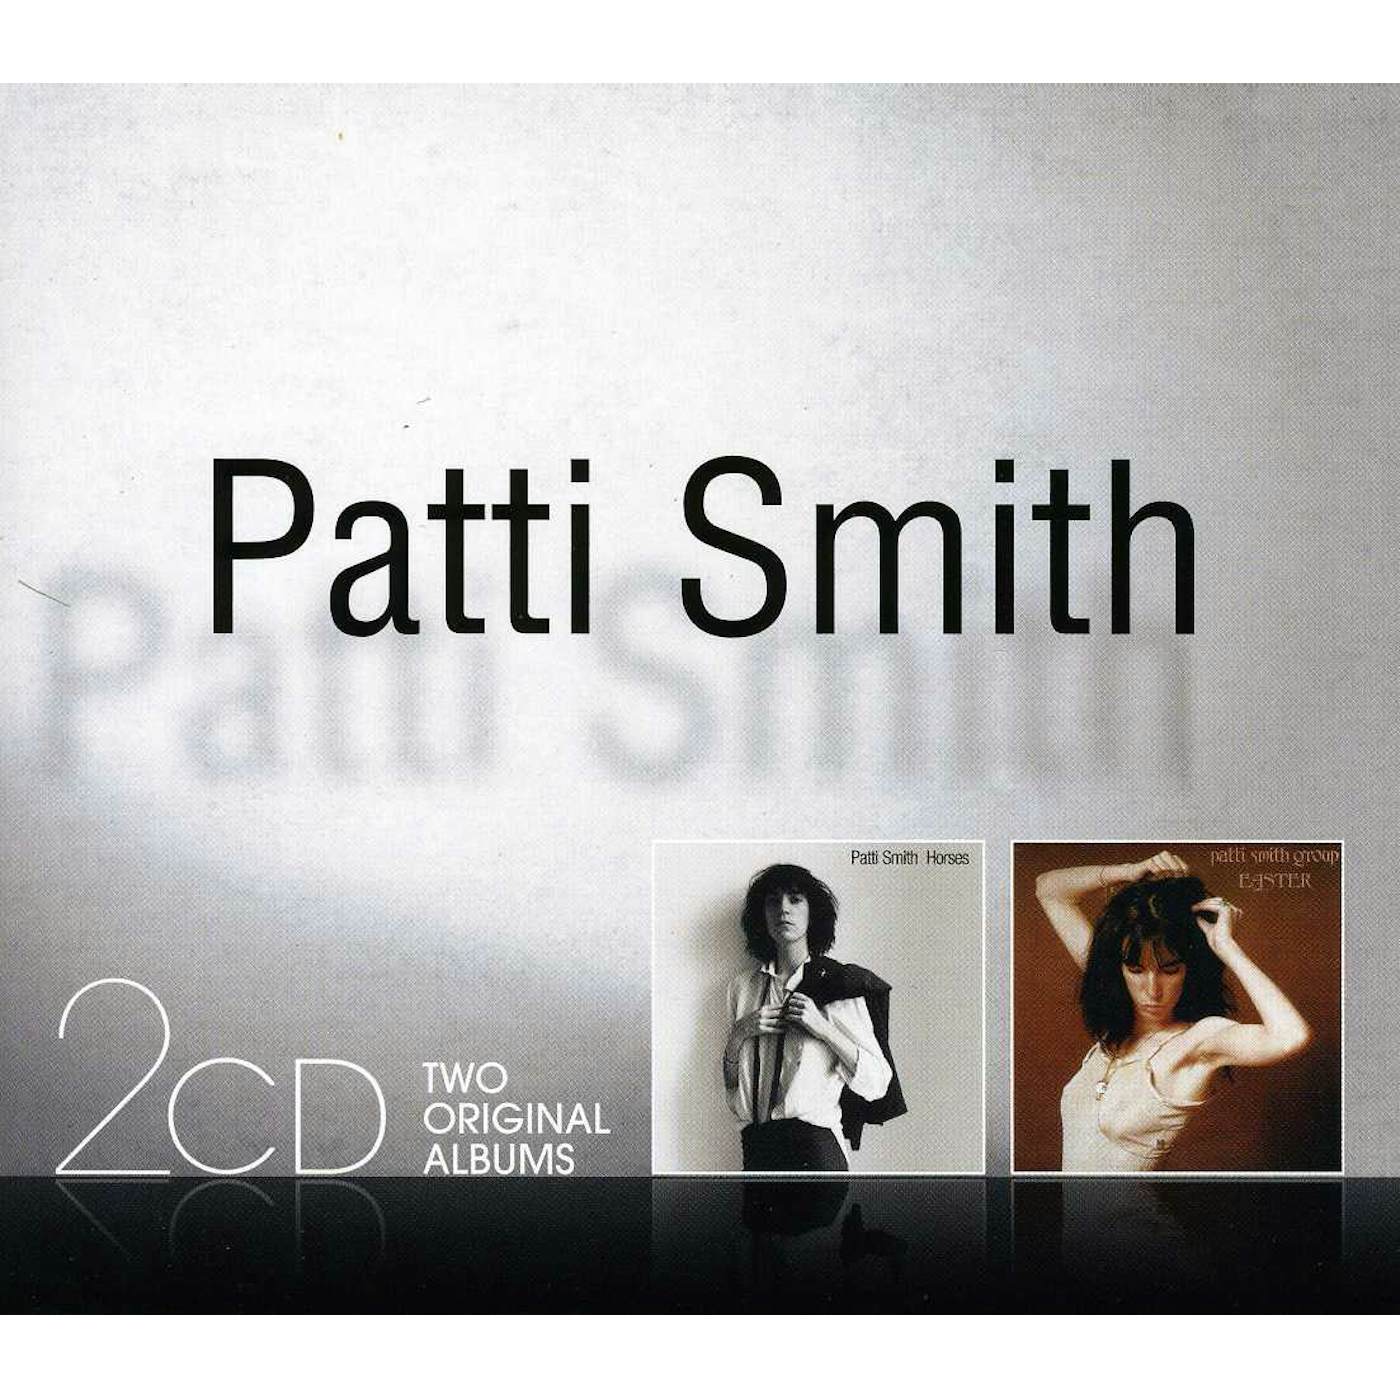 Patti Smith HORSES / EASTER CD